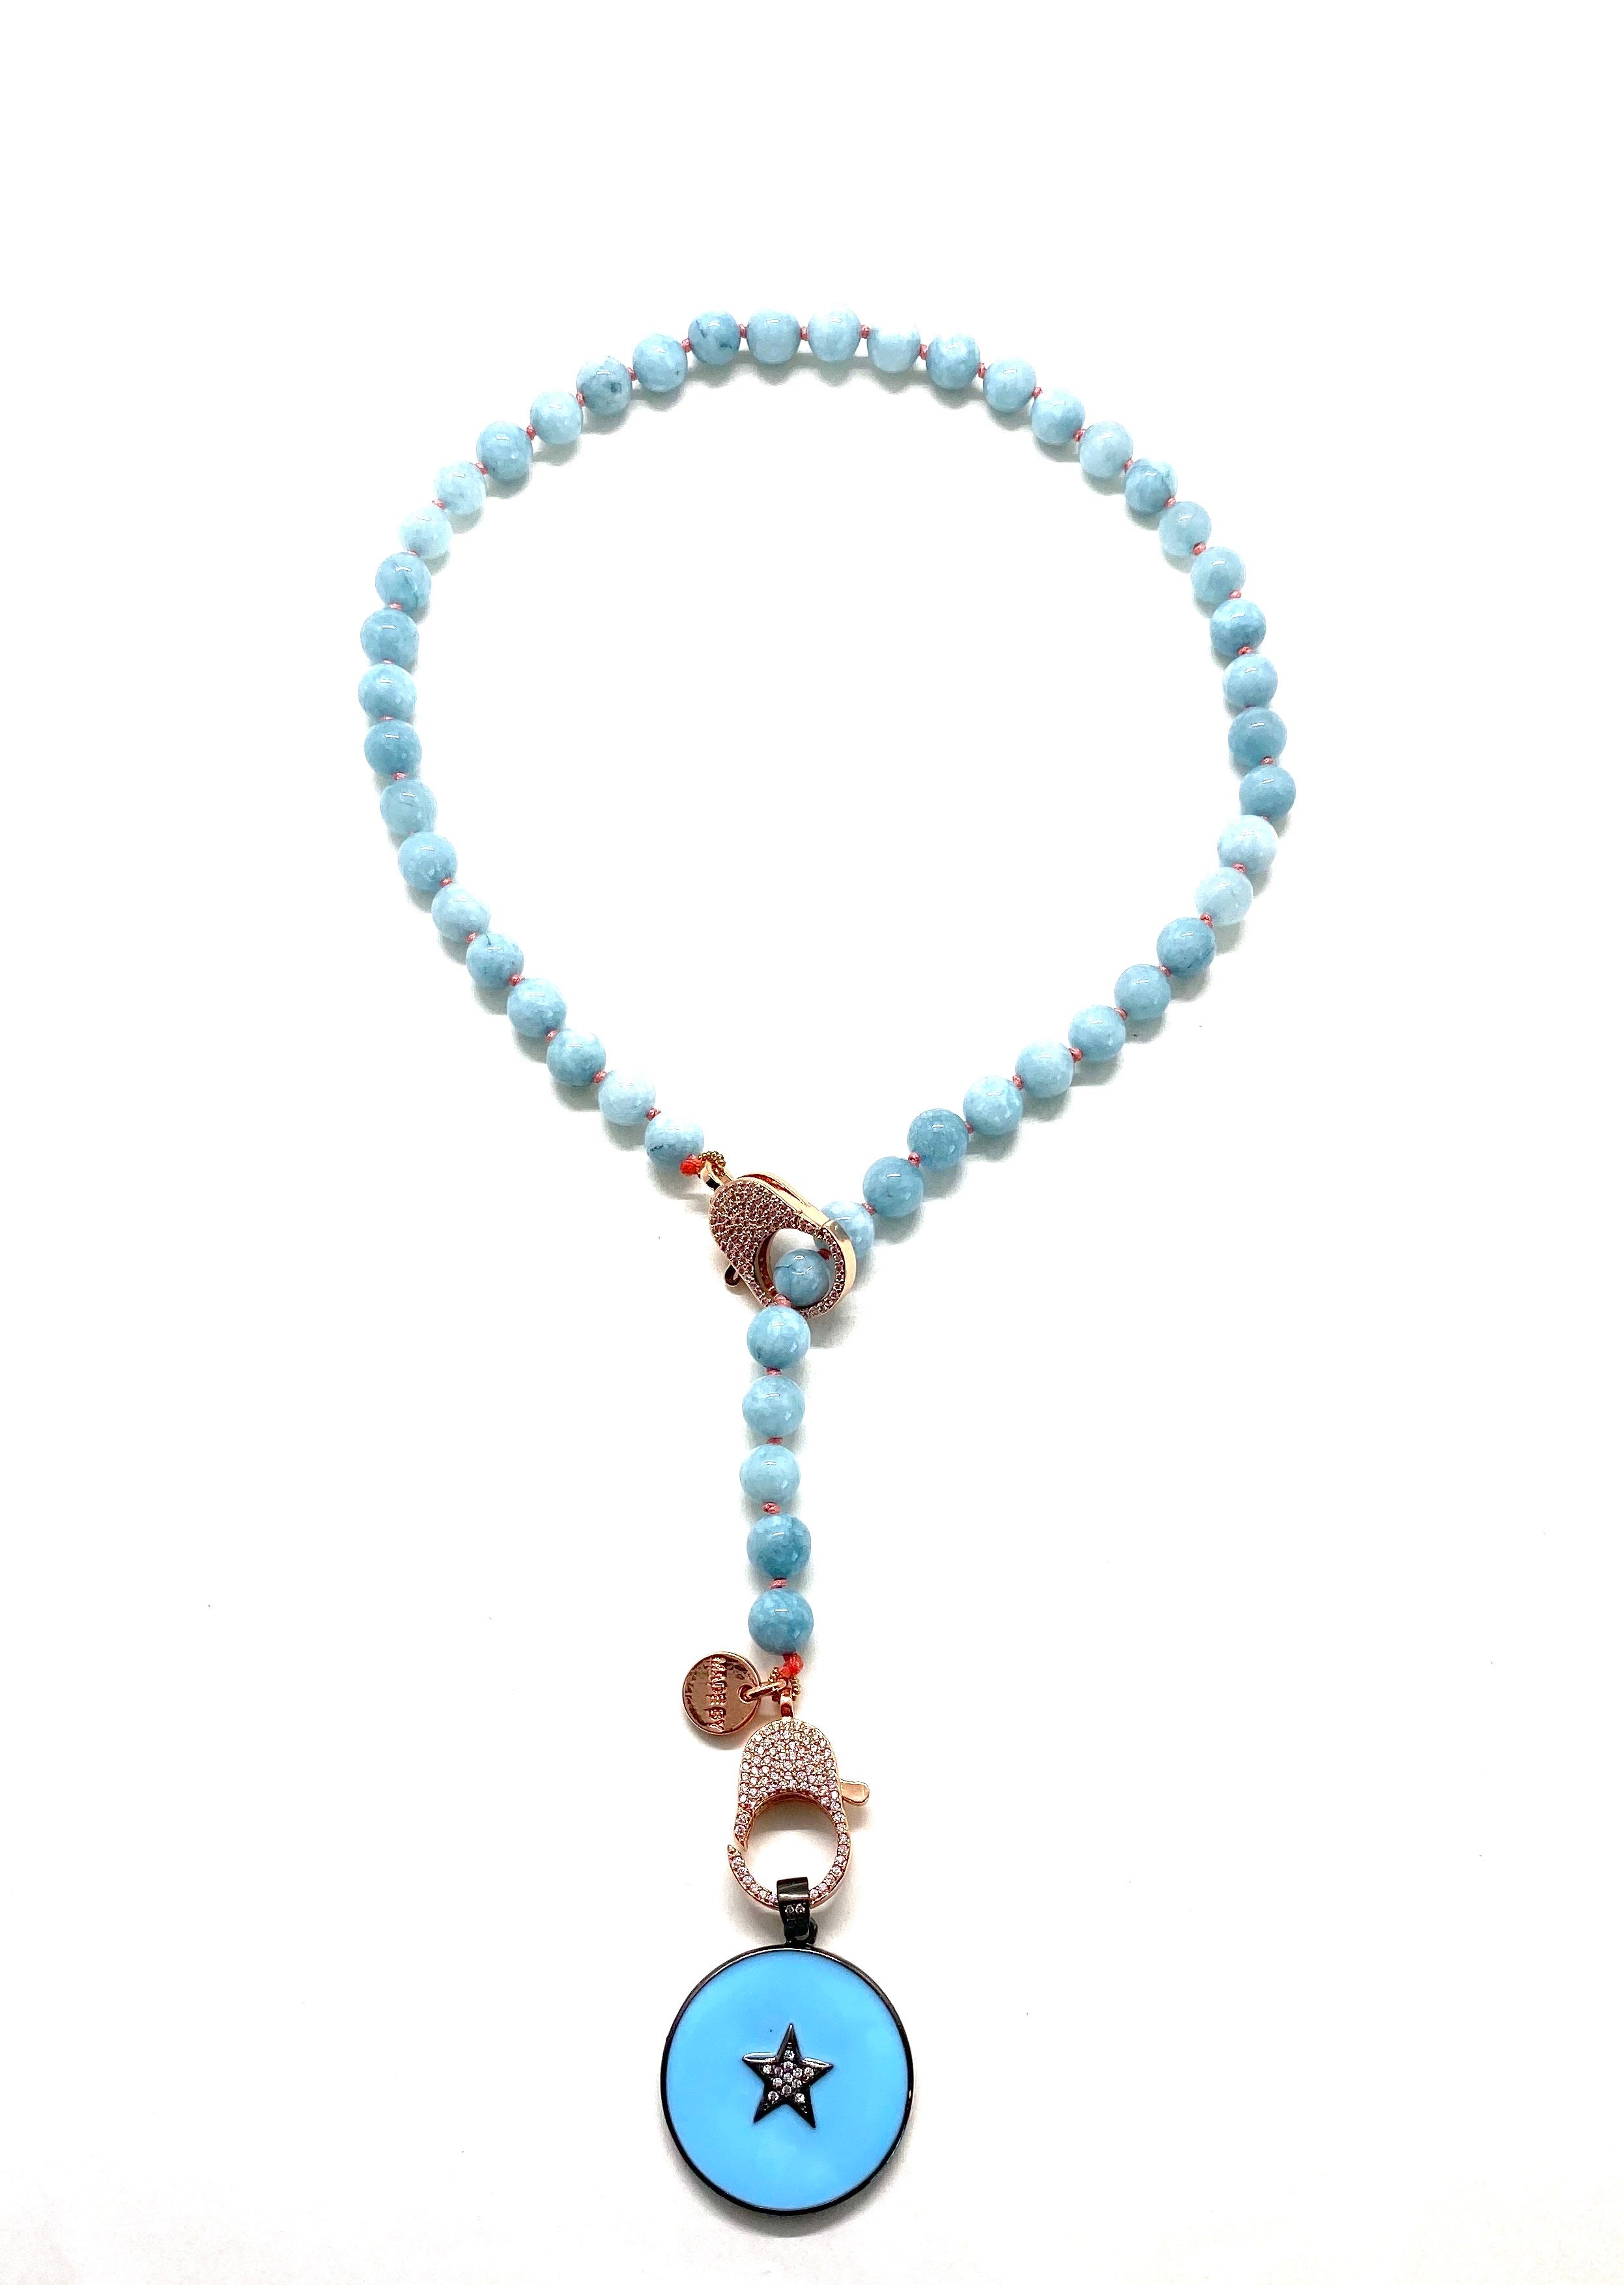 Blue jade Gaia necklace, blue sta pendant, rose gold clips